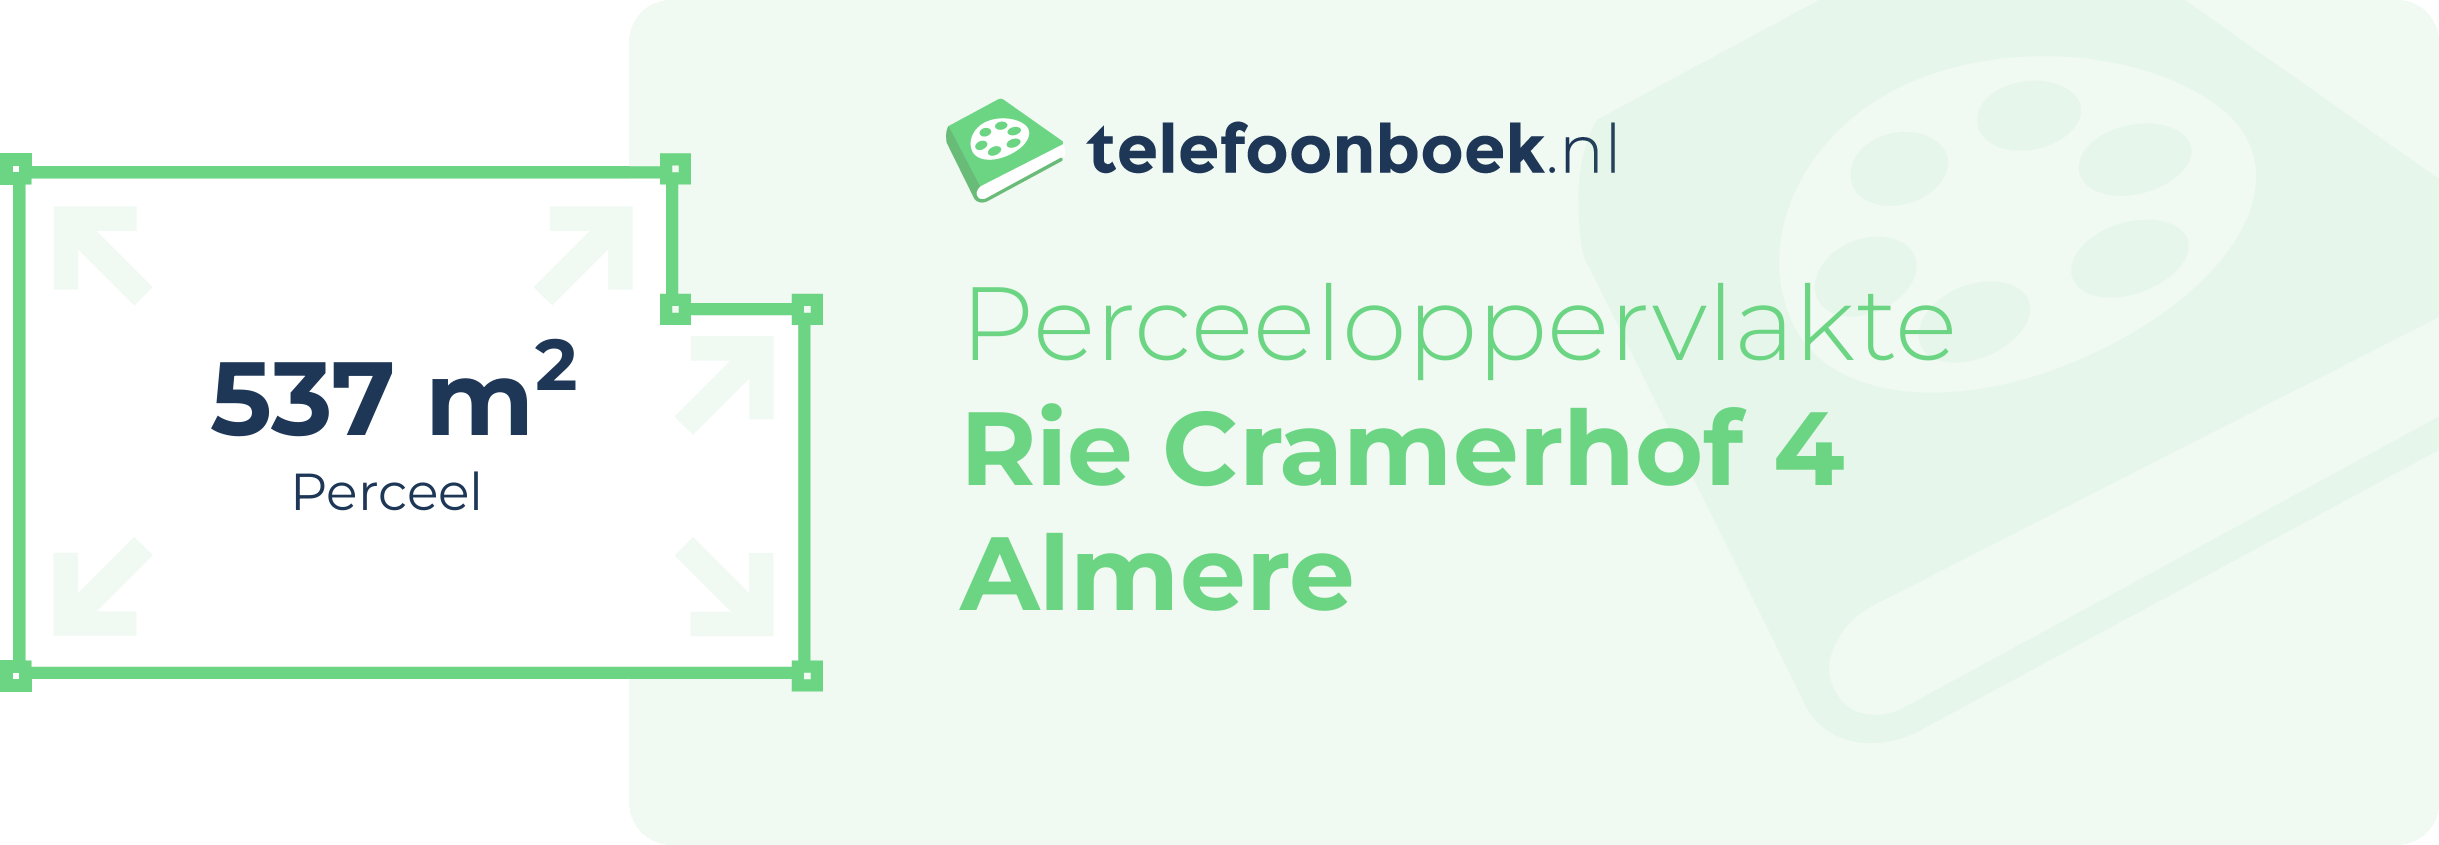 Perceeloppervlakte Rie Cramerhof 4 Almere